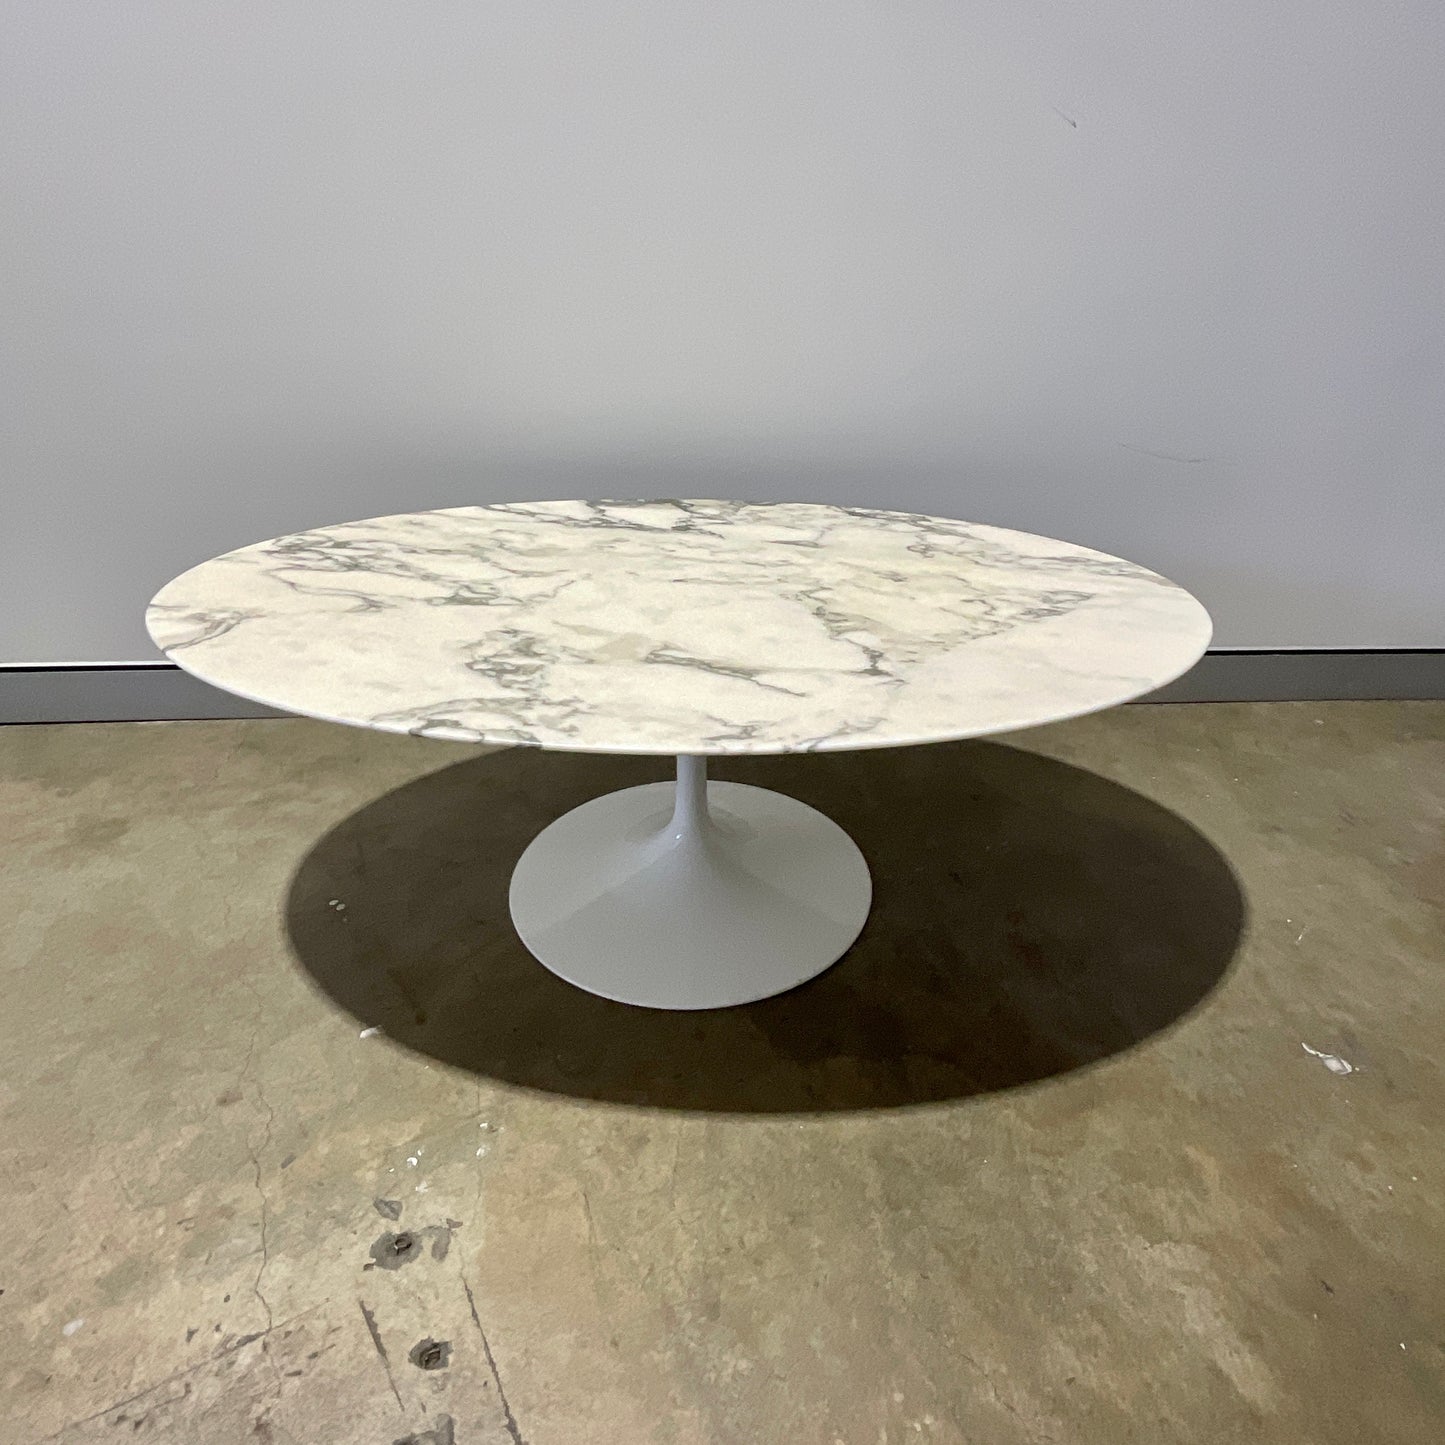 Load image into Gallery viewer, Saarinen Oval Coffee Table by Eero Saarinen for Knoll
